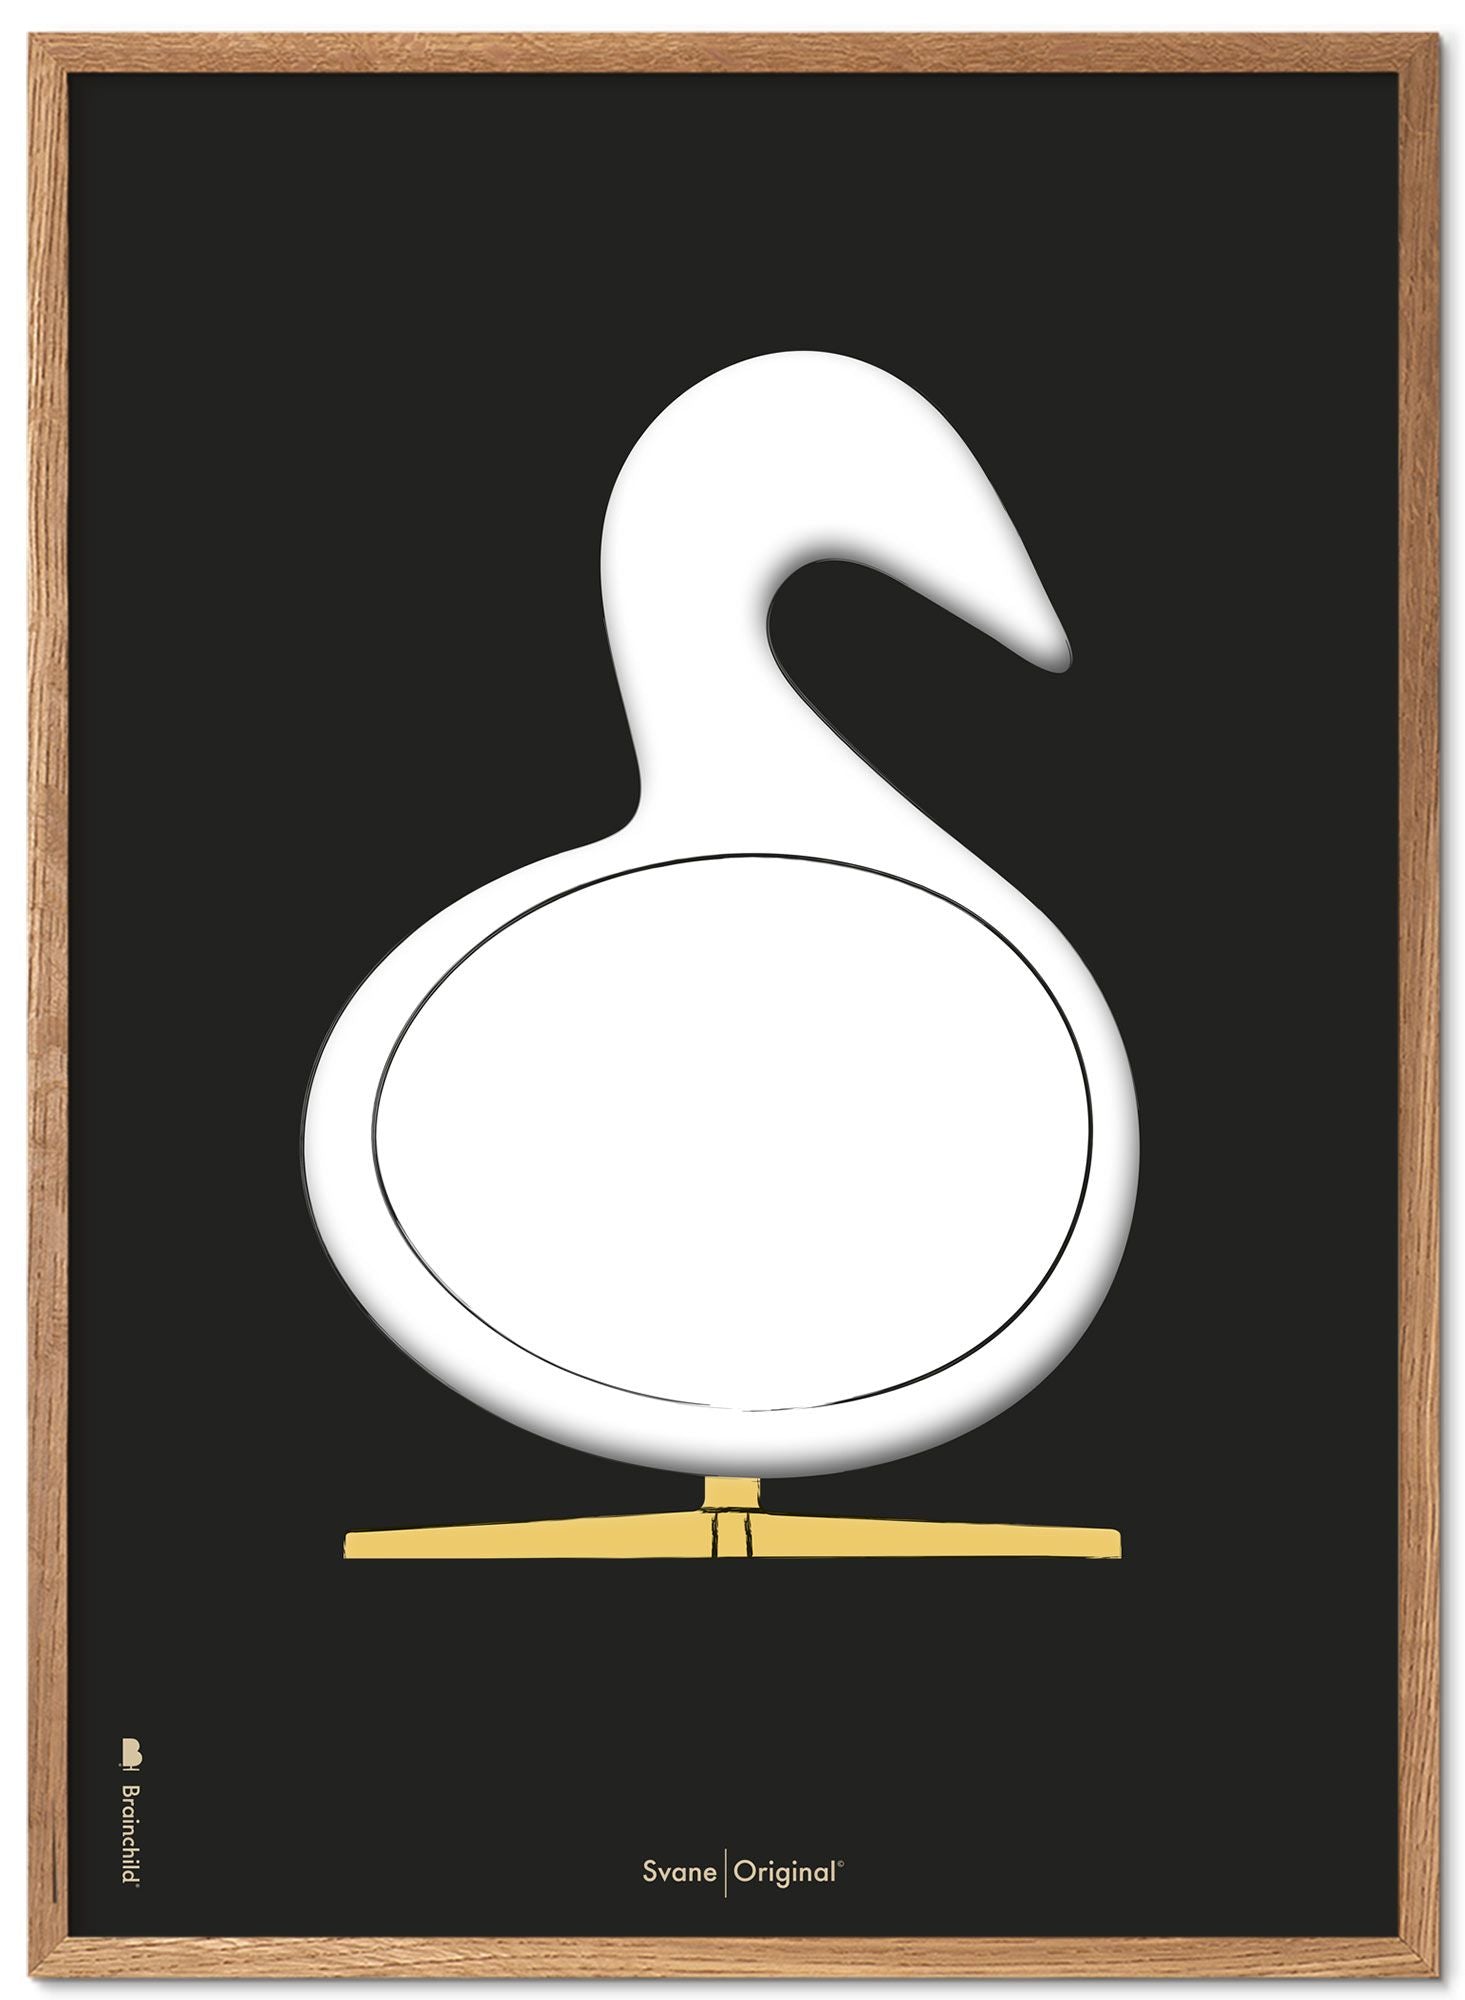 Brainchild Swan Design Sketch Poster Frame Made Of Light Wood 50x70 Cm, Black Background